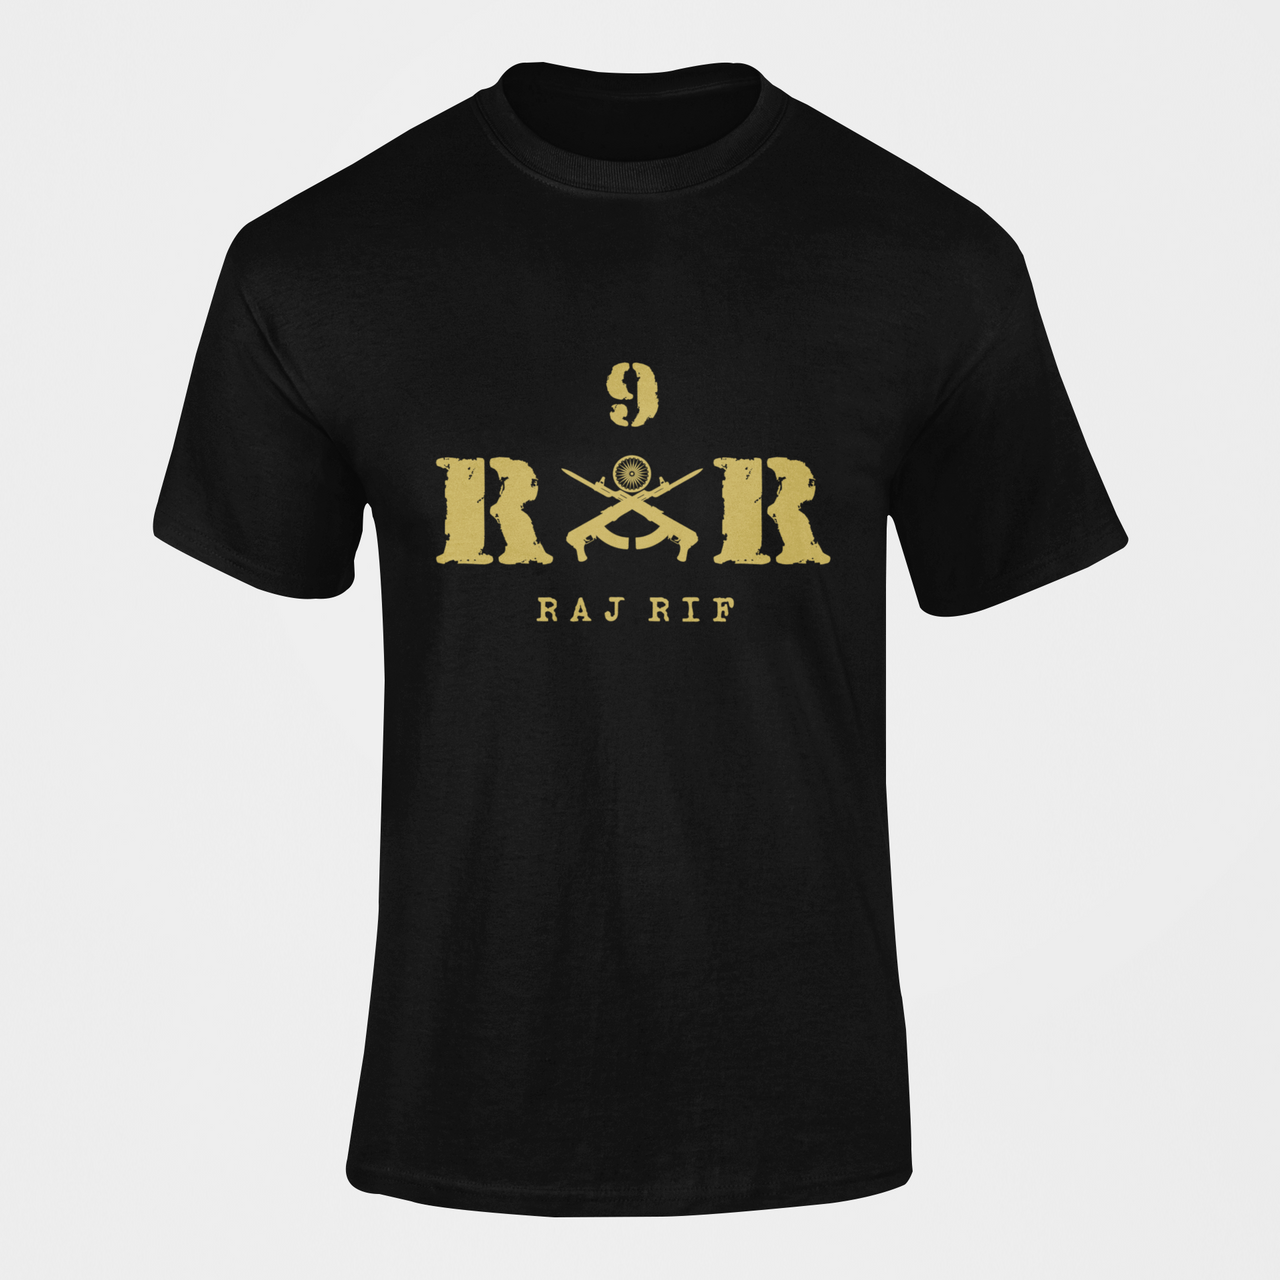 Rashtriya Rifles T-shirt - 9 Rr Raj Rif (men) - Oliveplanet Private Limited  at Rs 799.00, Bengaluru | ID: 2849384534255